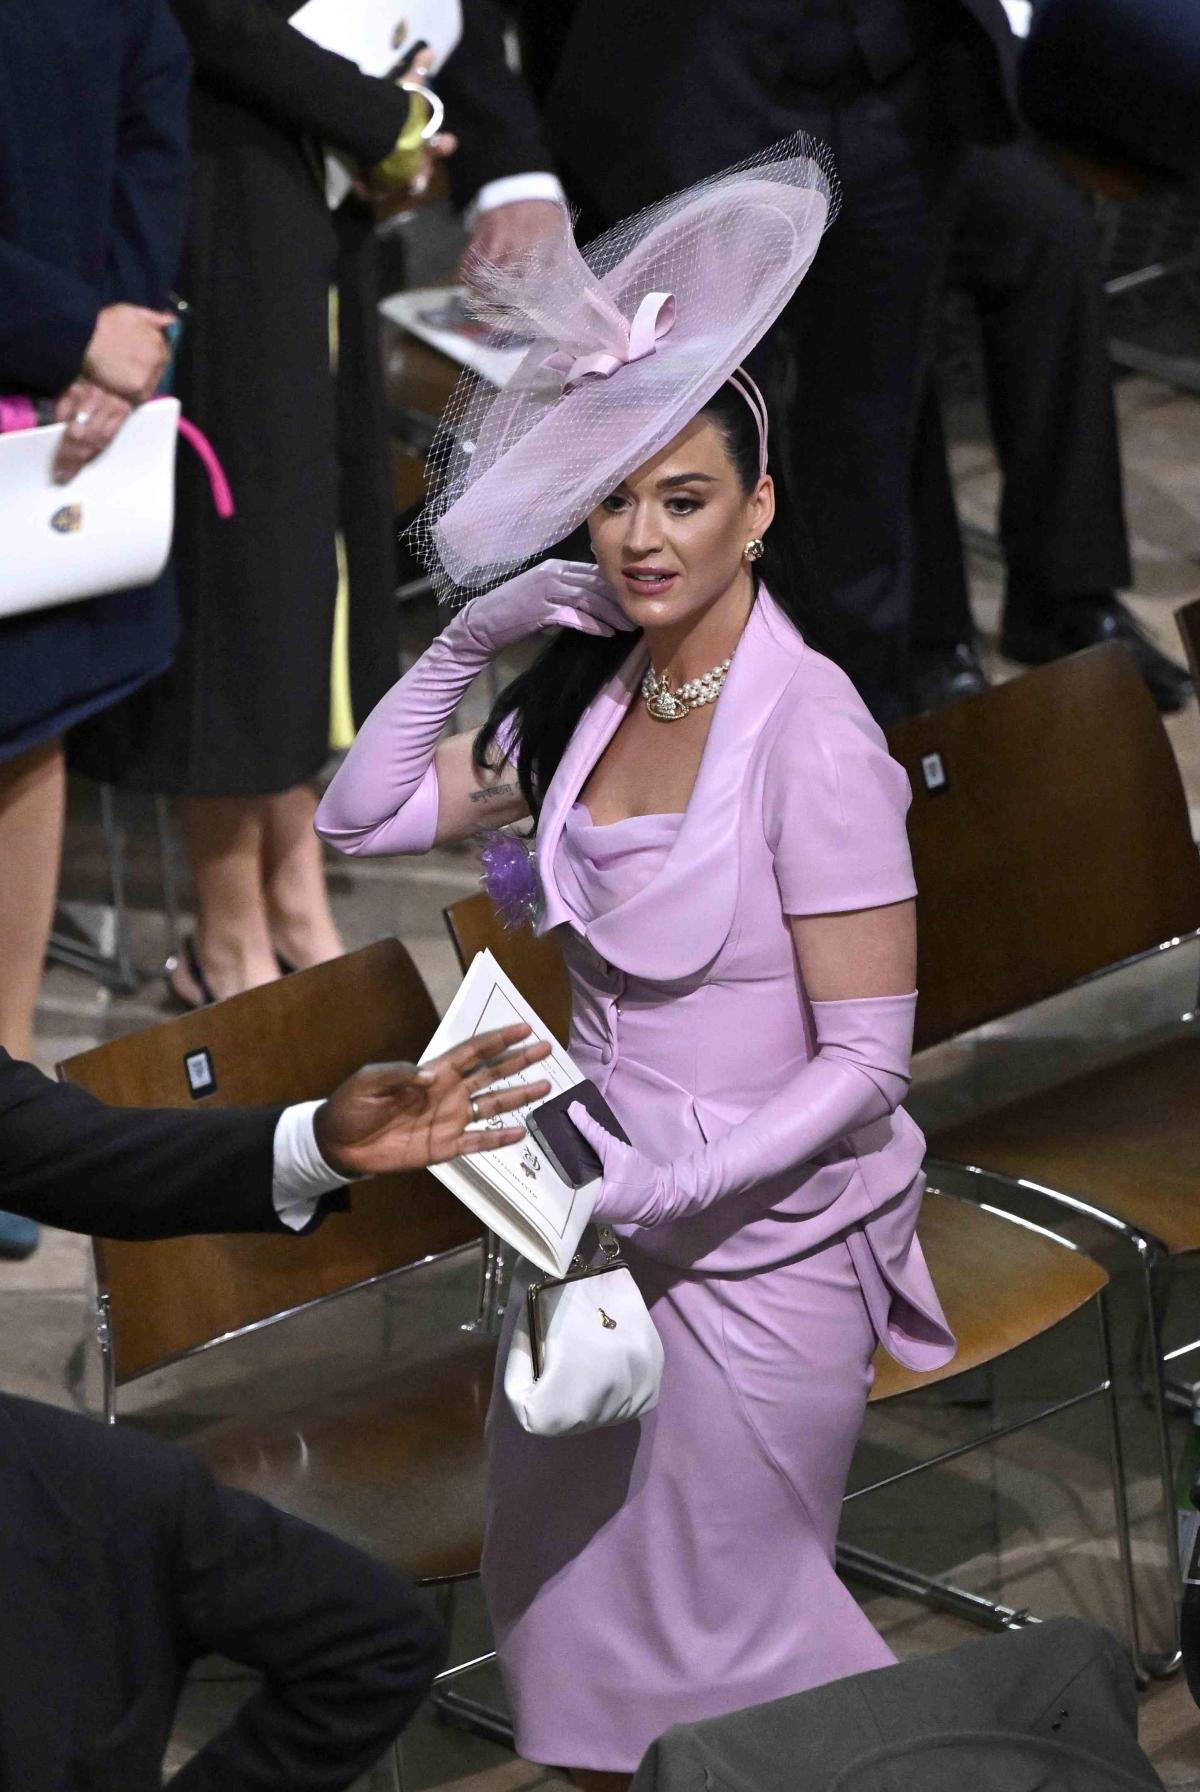 30+ Best Royal Wedding Hats - British Royal Wedding Hats Through the Years